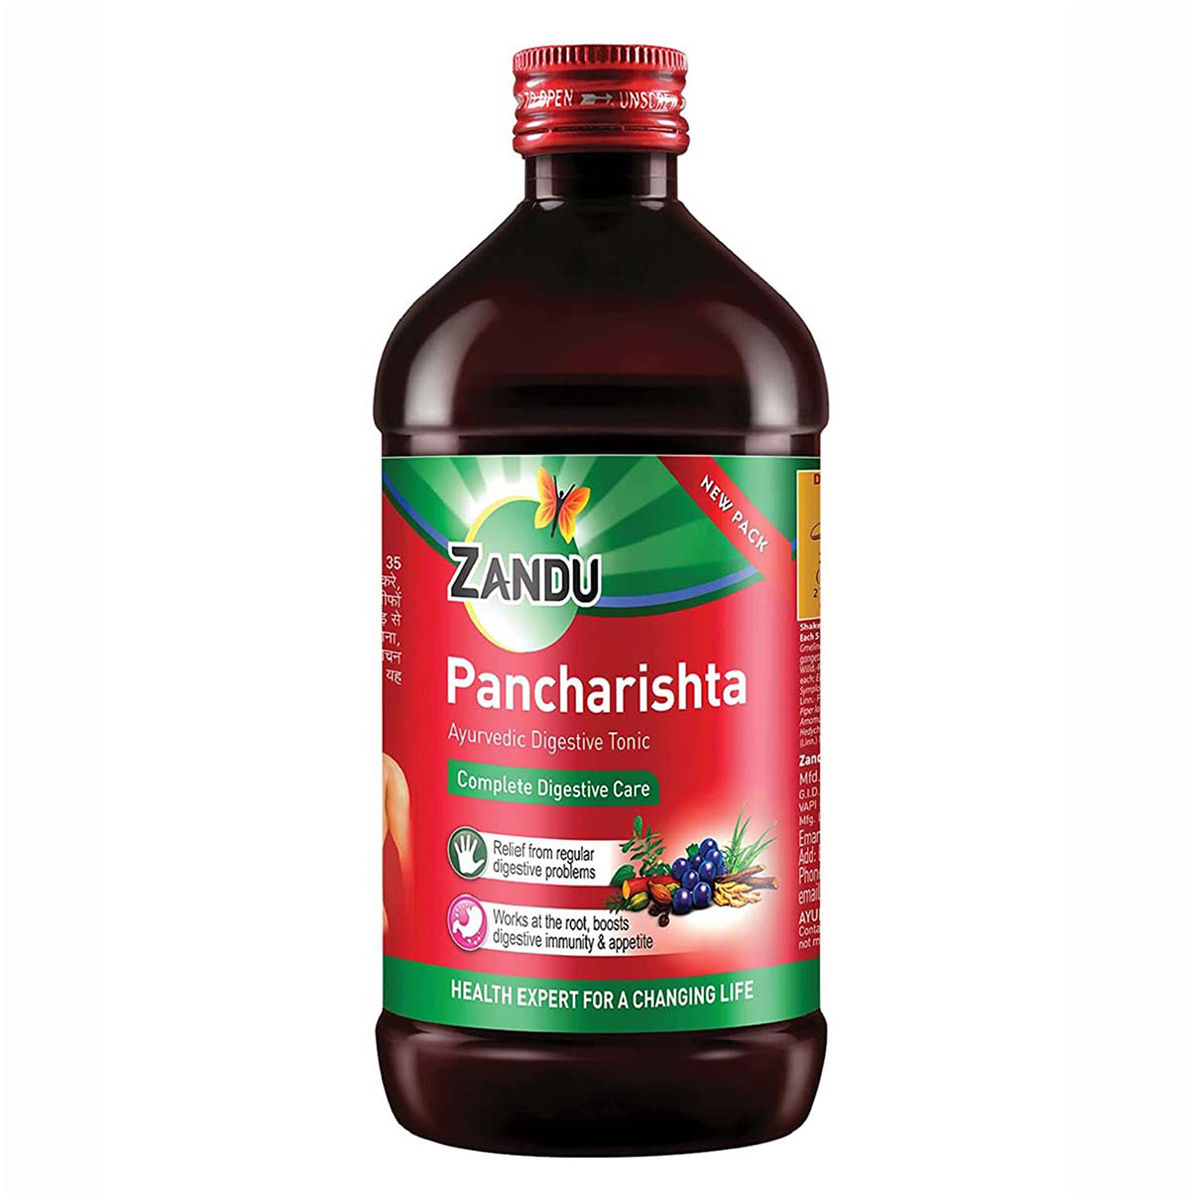 Buy Zandu Pancharistha Ayurvedic Digestive Tonic, 450 ml Online